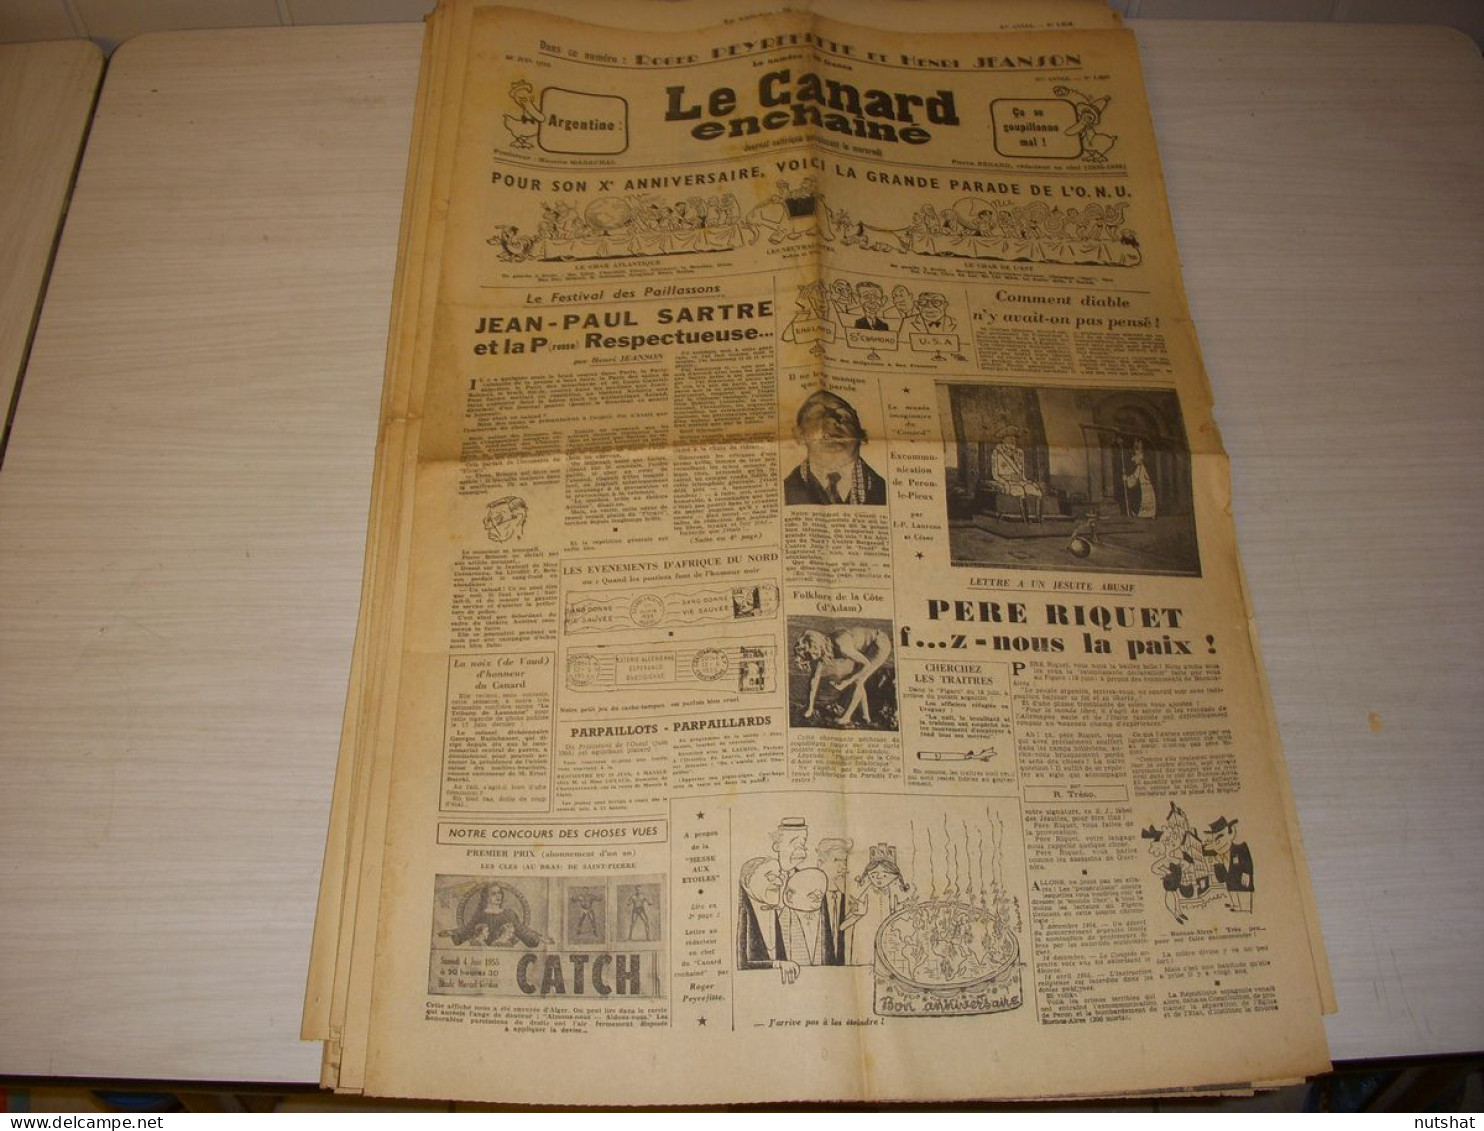 CANARD ENCHAINE 1809 22.06.1955 Henri SALVADOR Rene PLEVEN Alphonse JUIN SARTRE - Politics